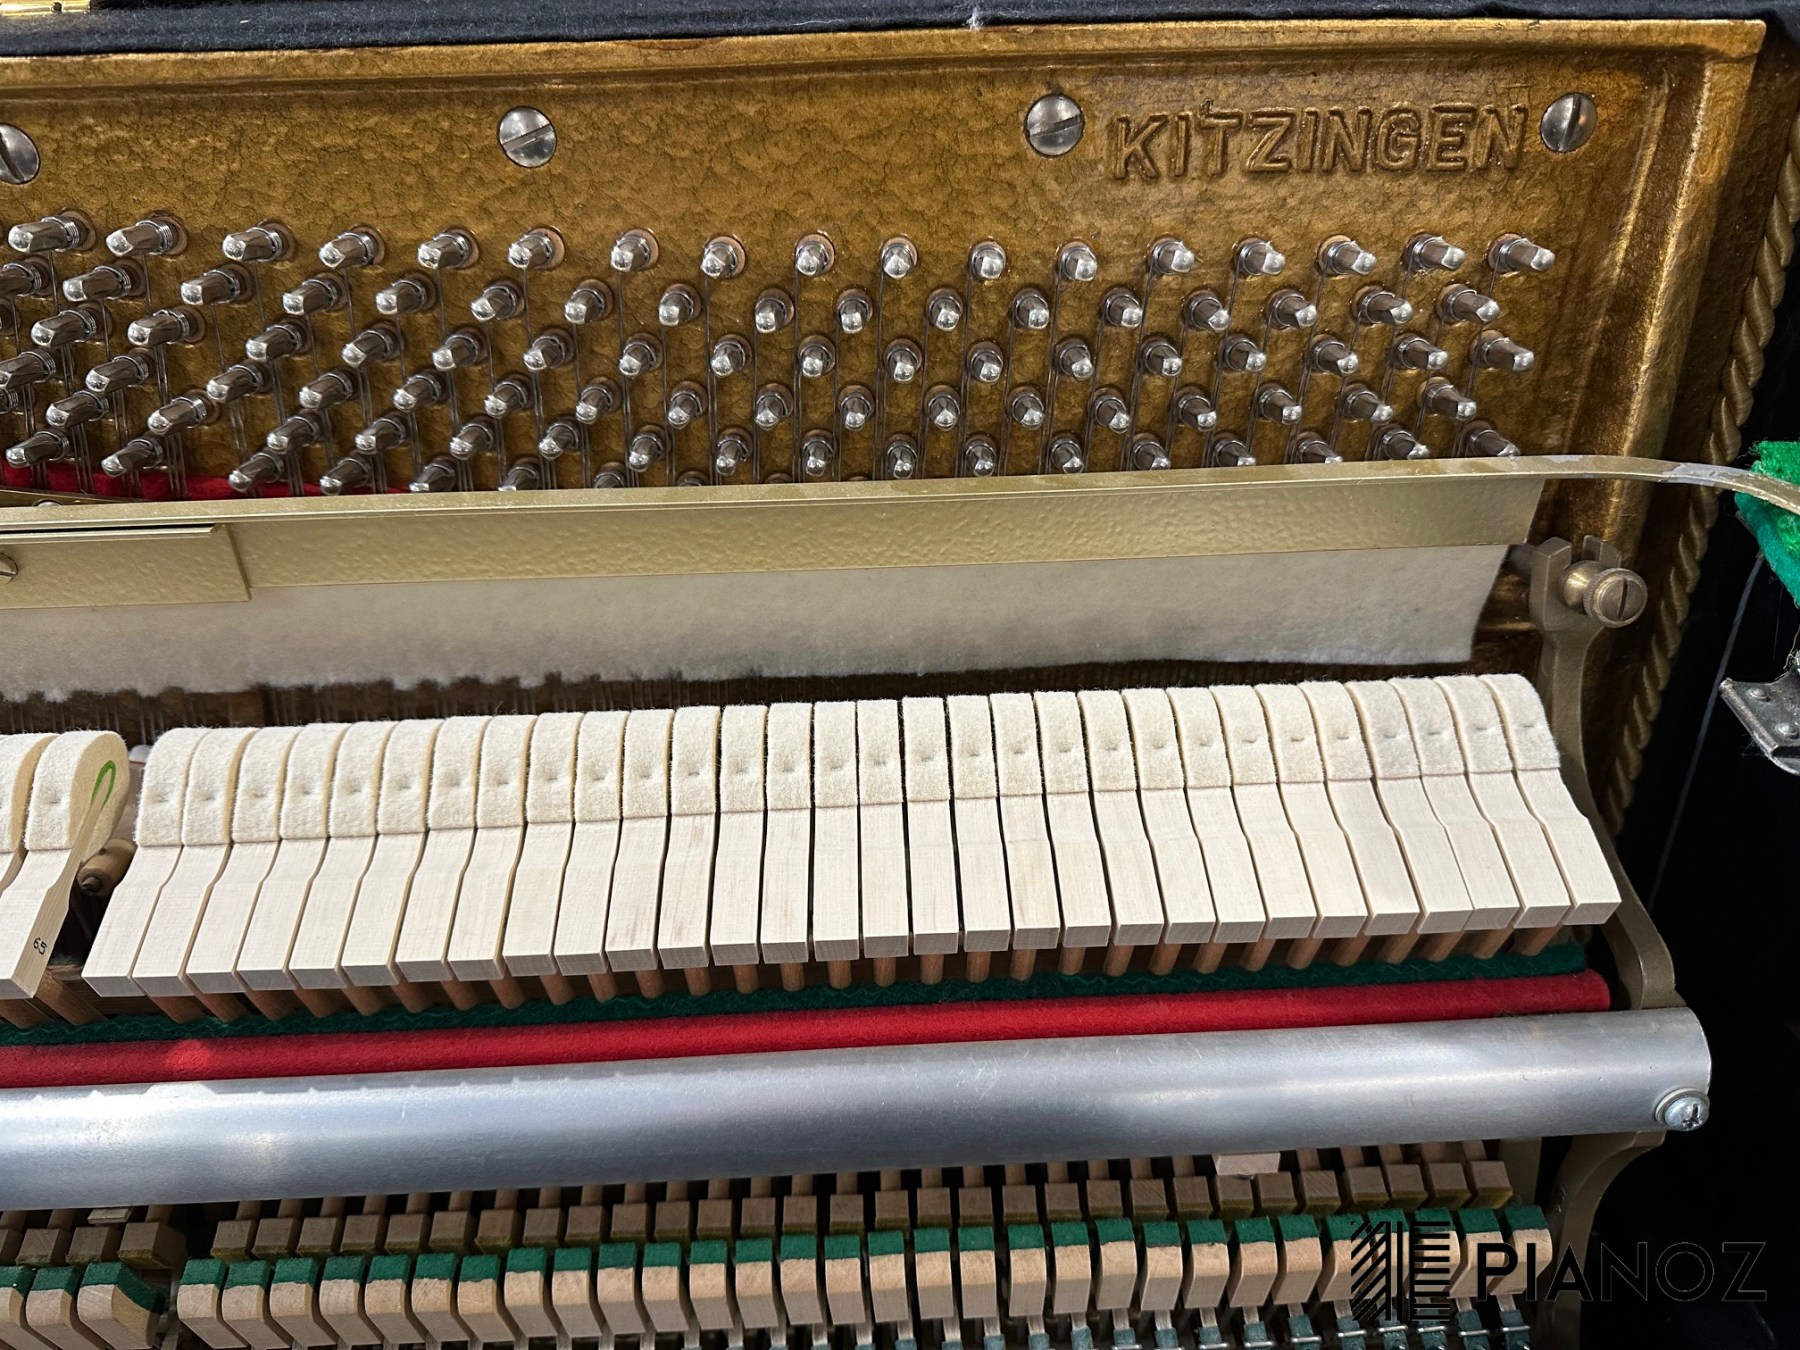 Seiler 114 Upright Piano piano for sale in UK